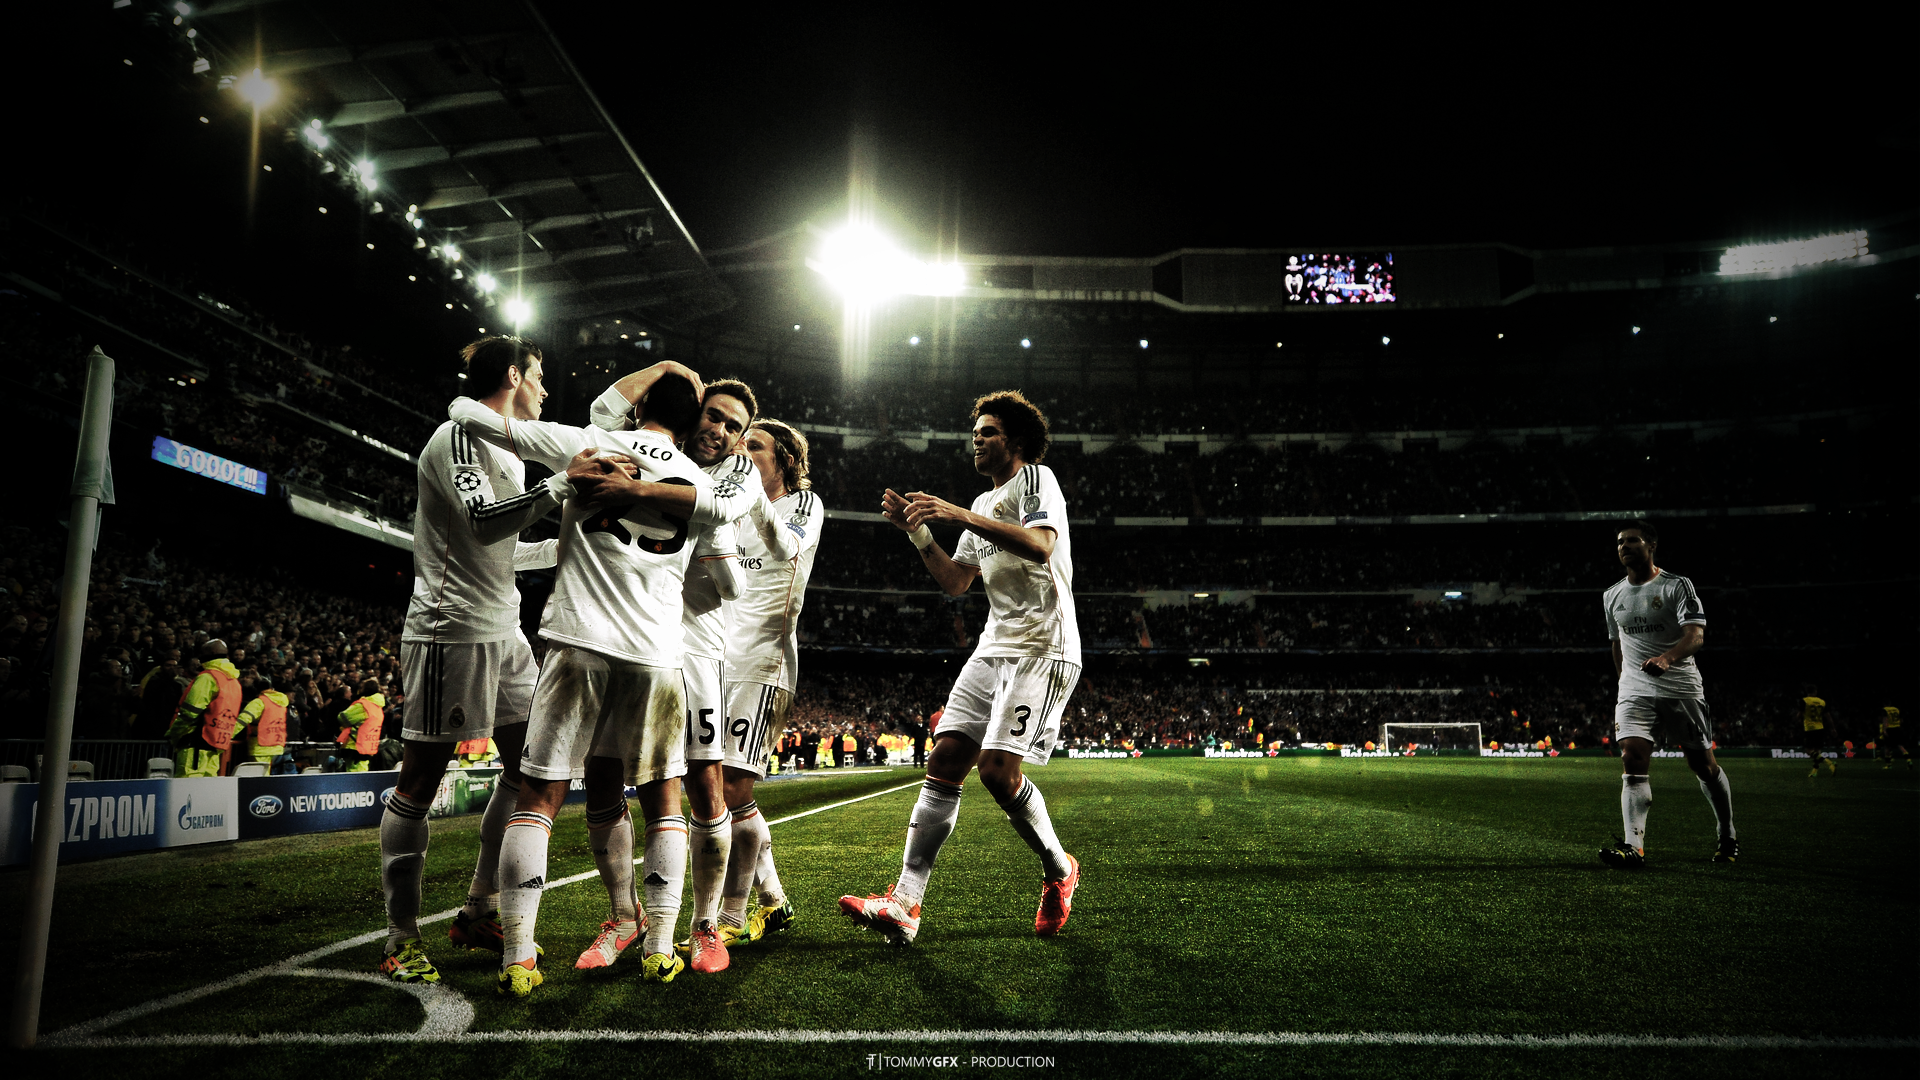 Real Madrid Background WallpaperSafari